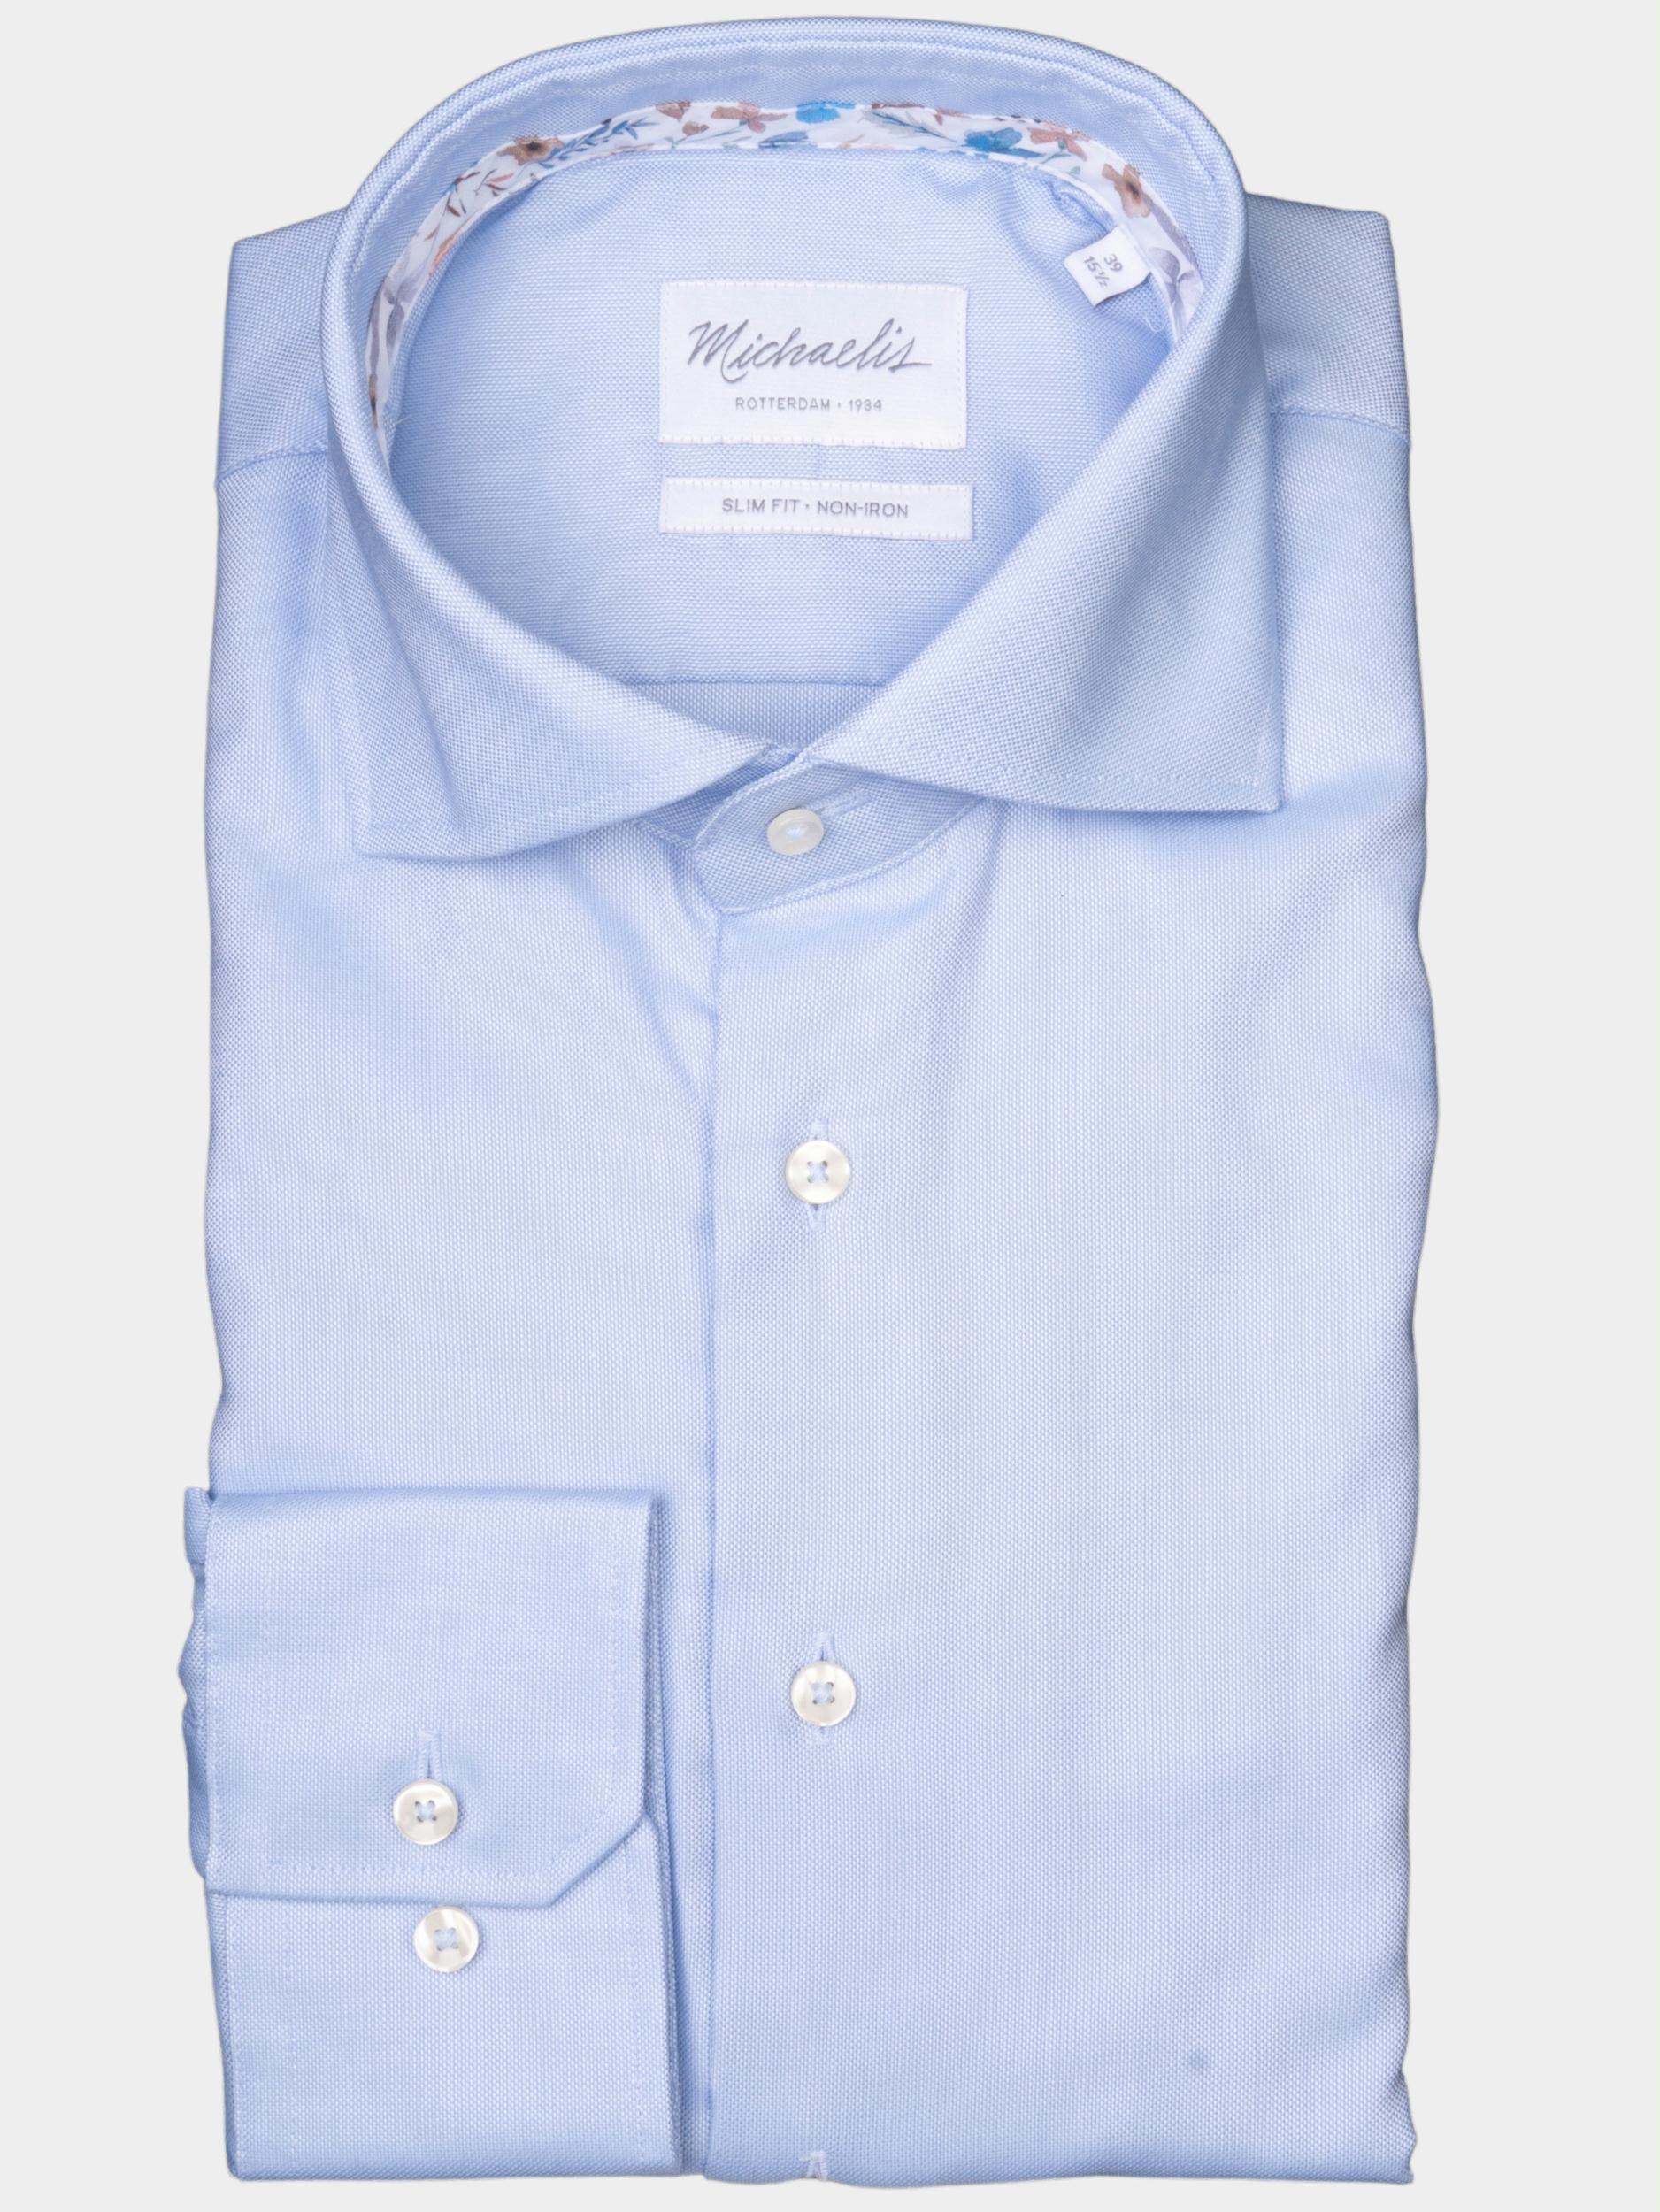 Michaelis Business hemd lange mouw Blauw  PMUH10001B/M